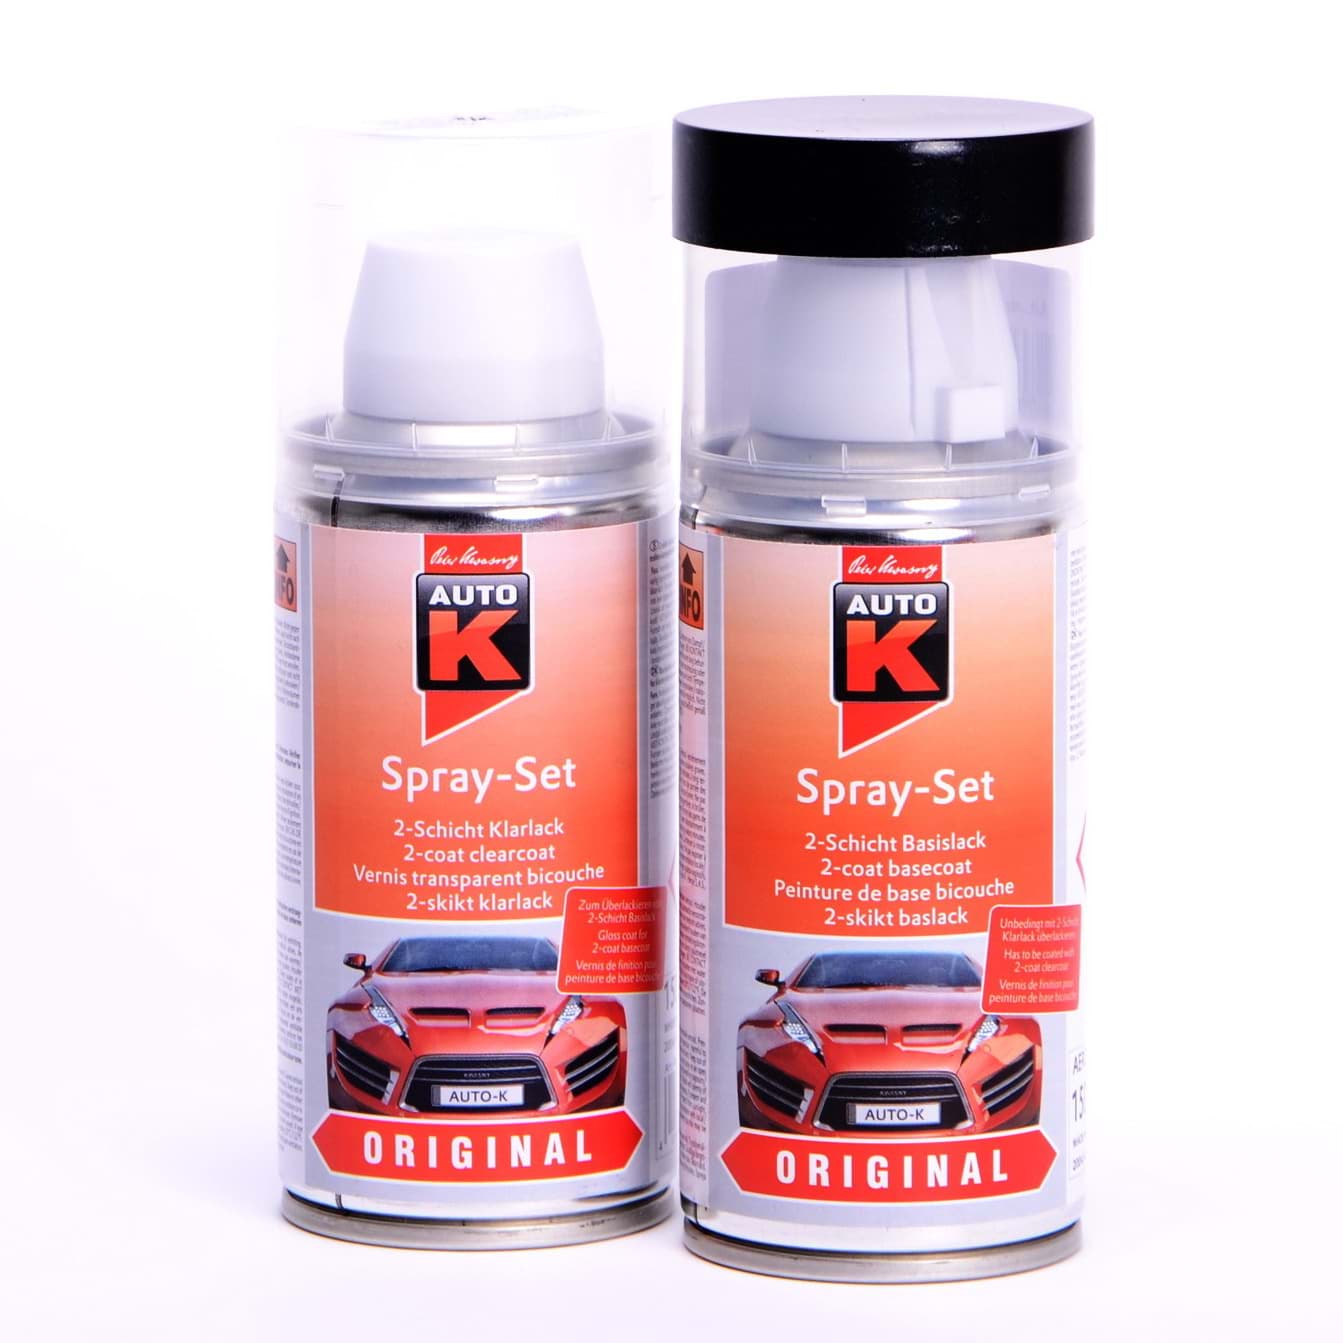 Afbeelding van Auto-K Spray-Set Autolack für Opel 283 nautilusblau met 21389